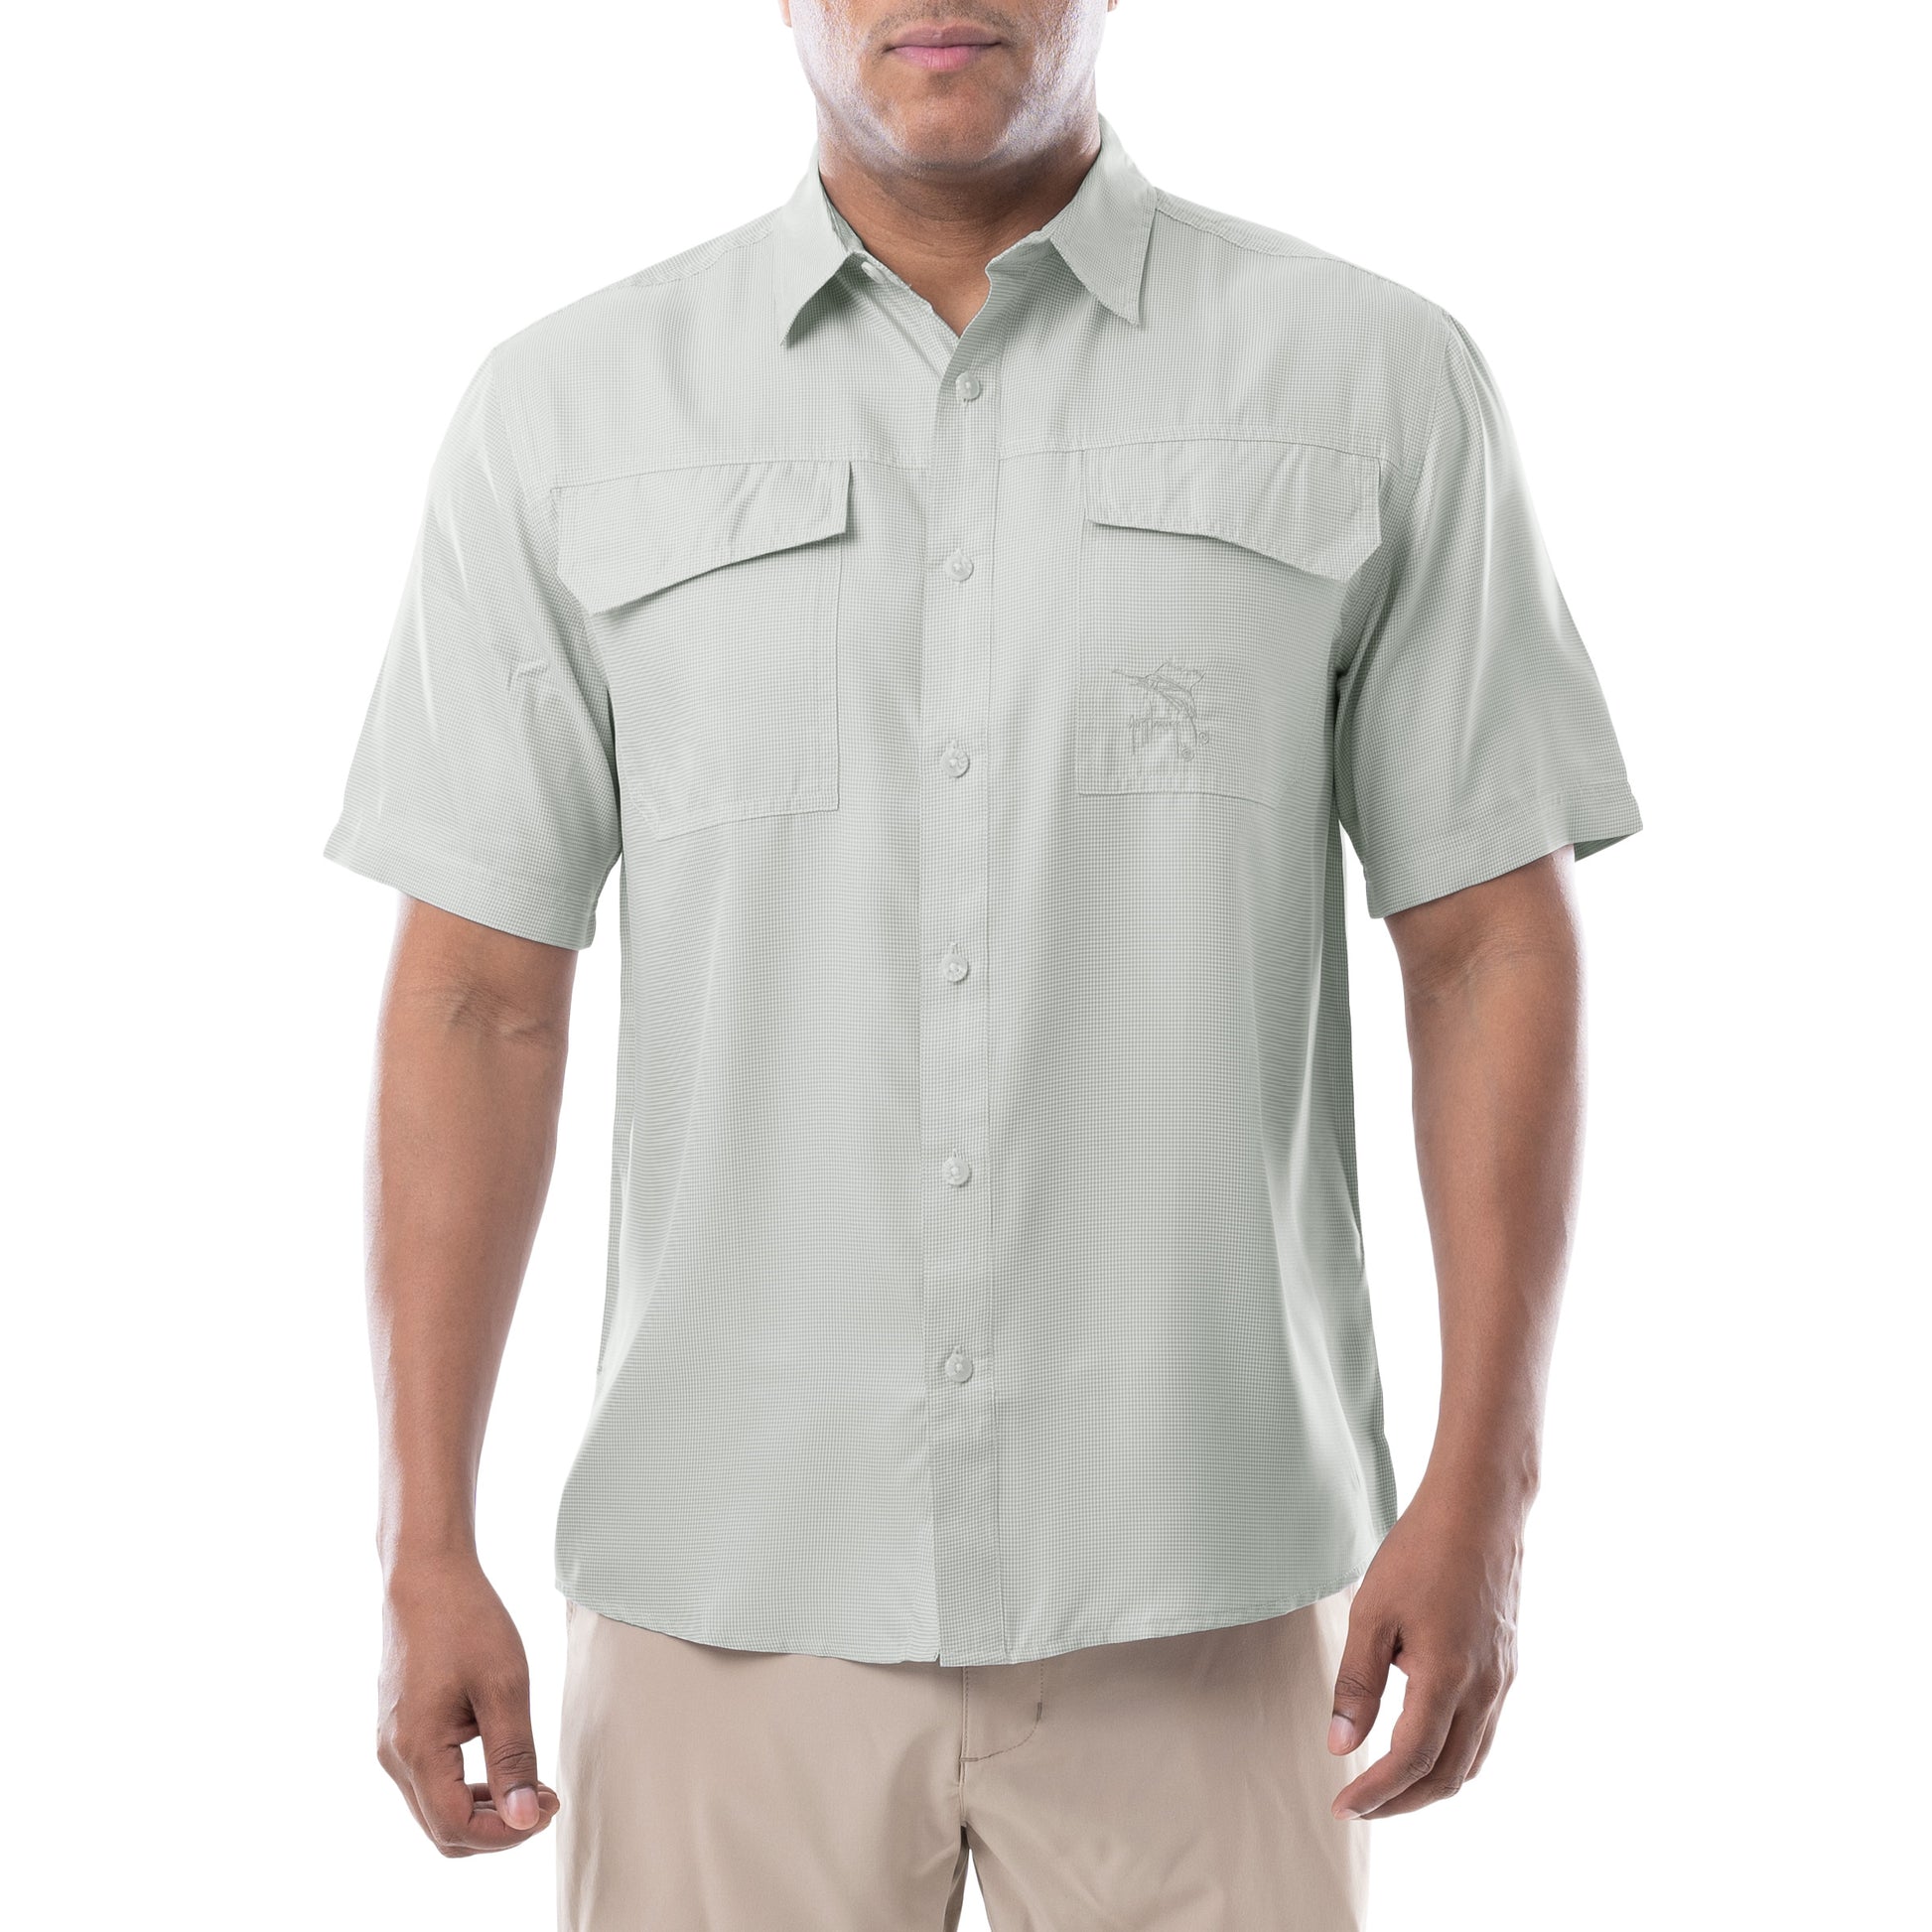 Men Performance Fishing Shirts Short Sleeve Plaid Shirt Fast Dry